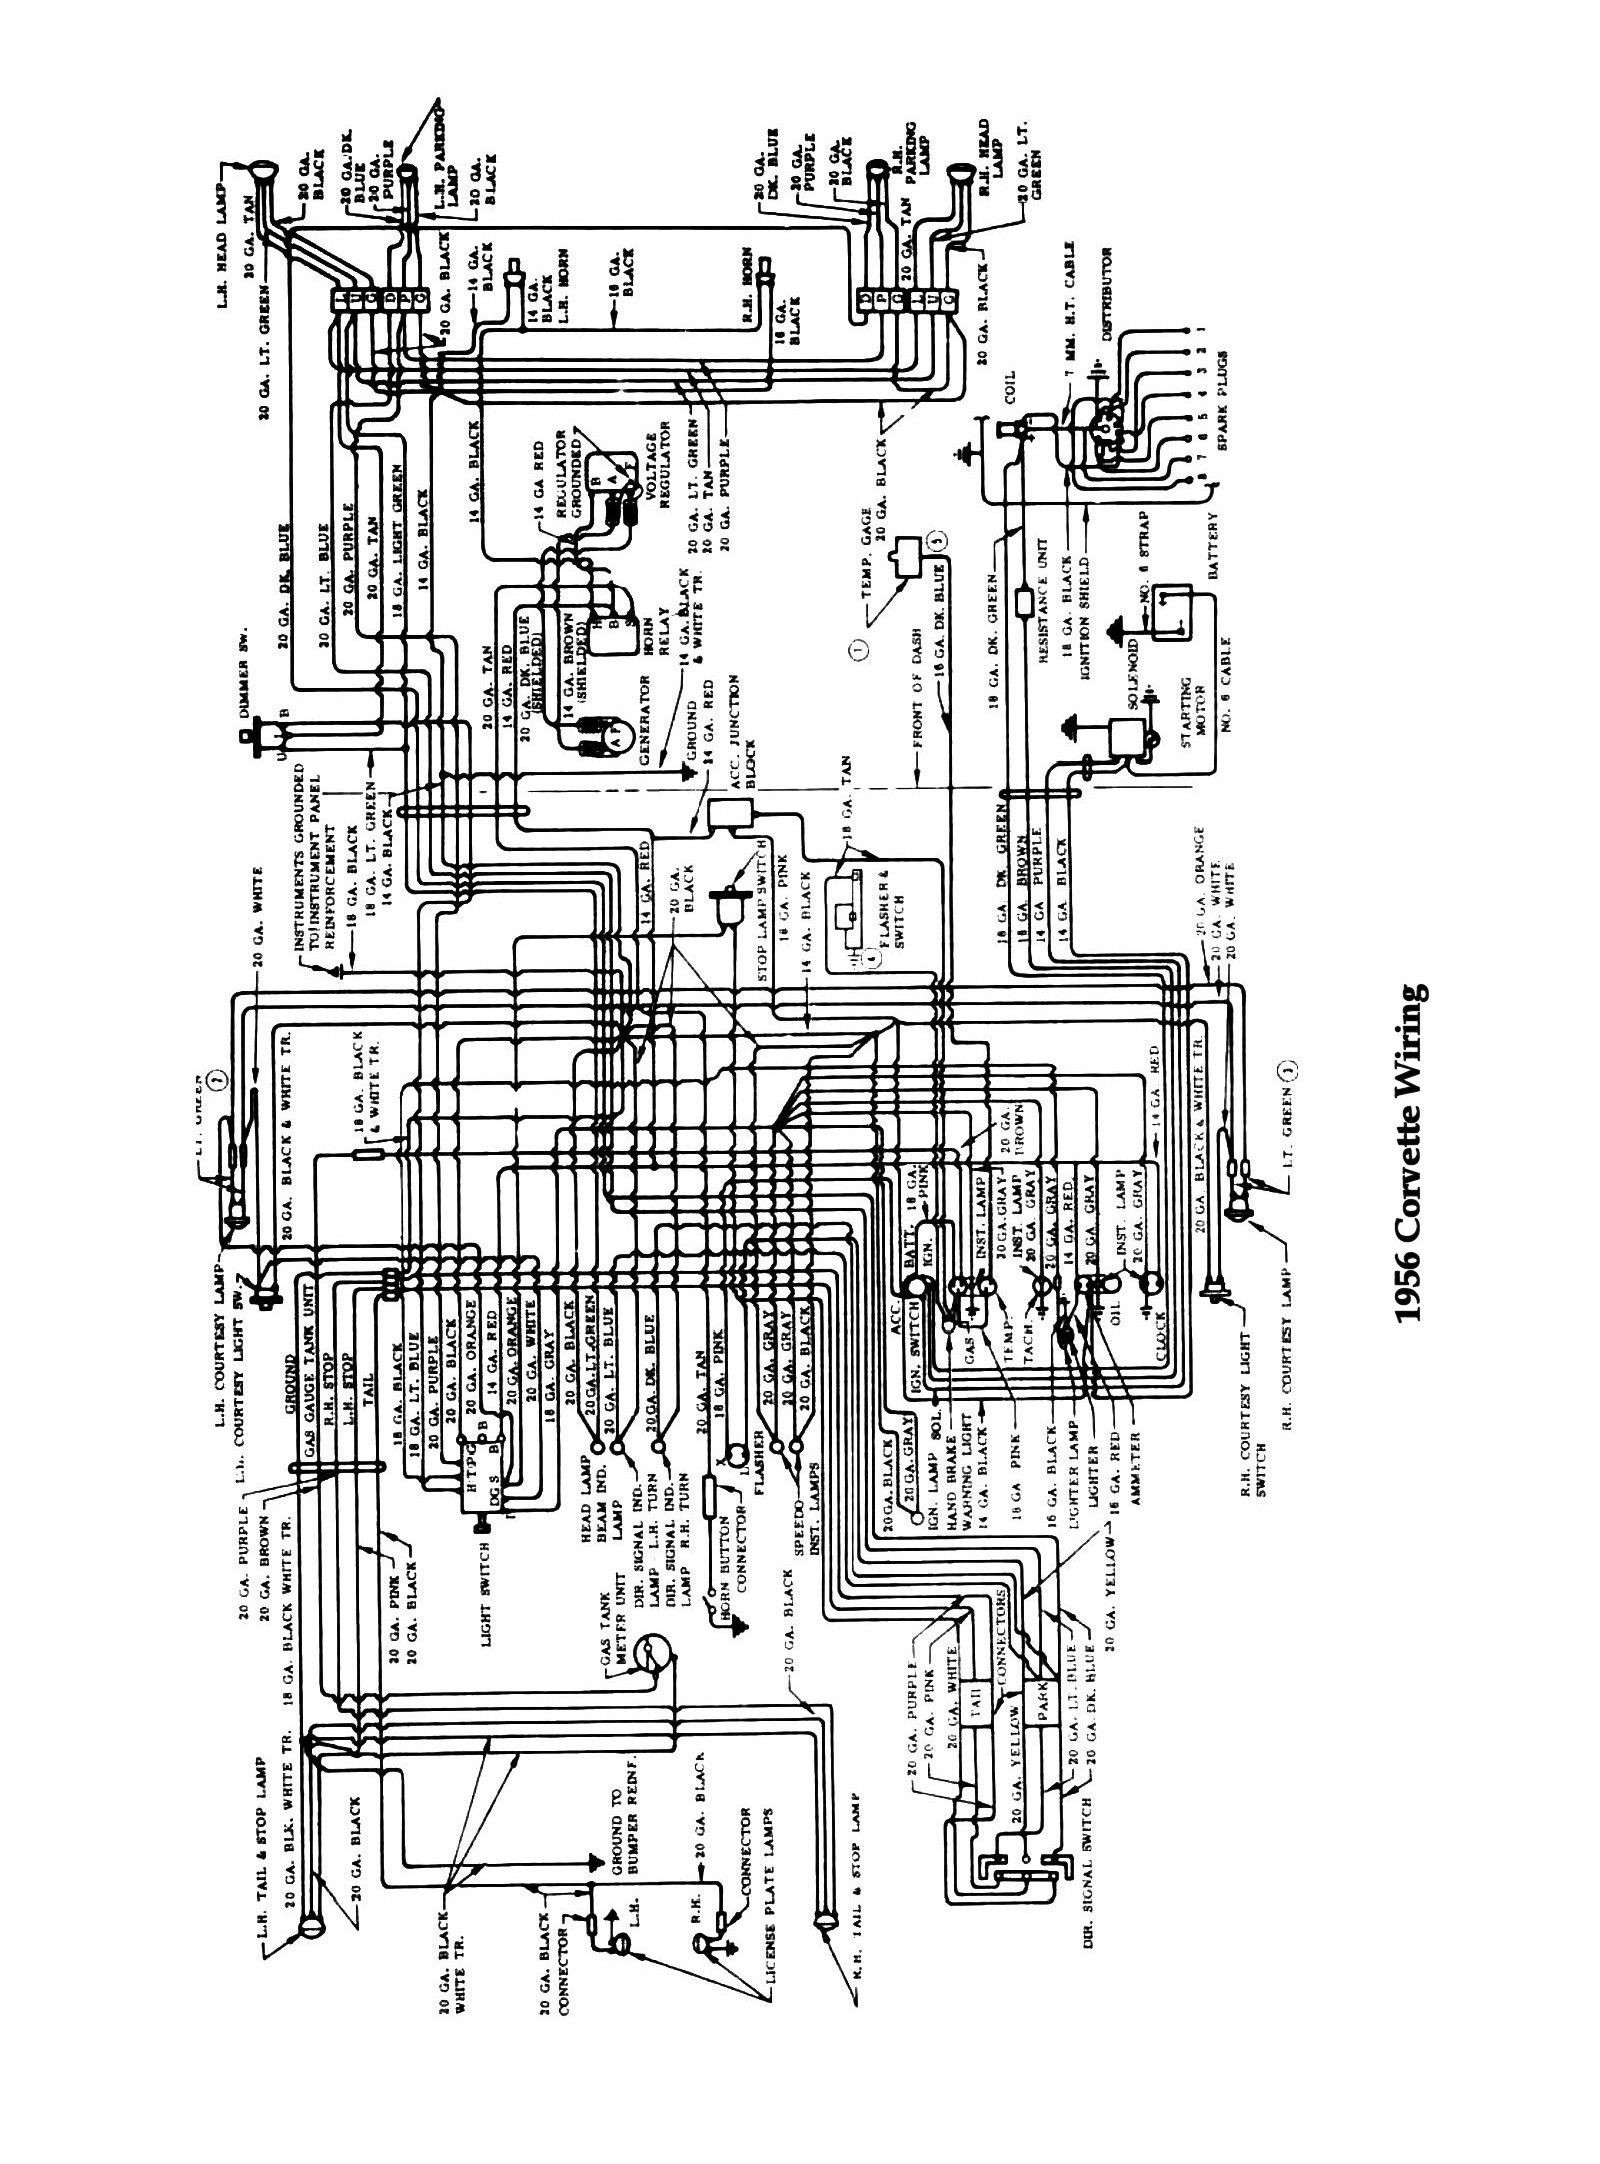 72 Chevelle Wiring Diagram 1e567 1984 Pontiac Grand Prix Wiring Diagram Of 72 Chevelle Wiring Diagram